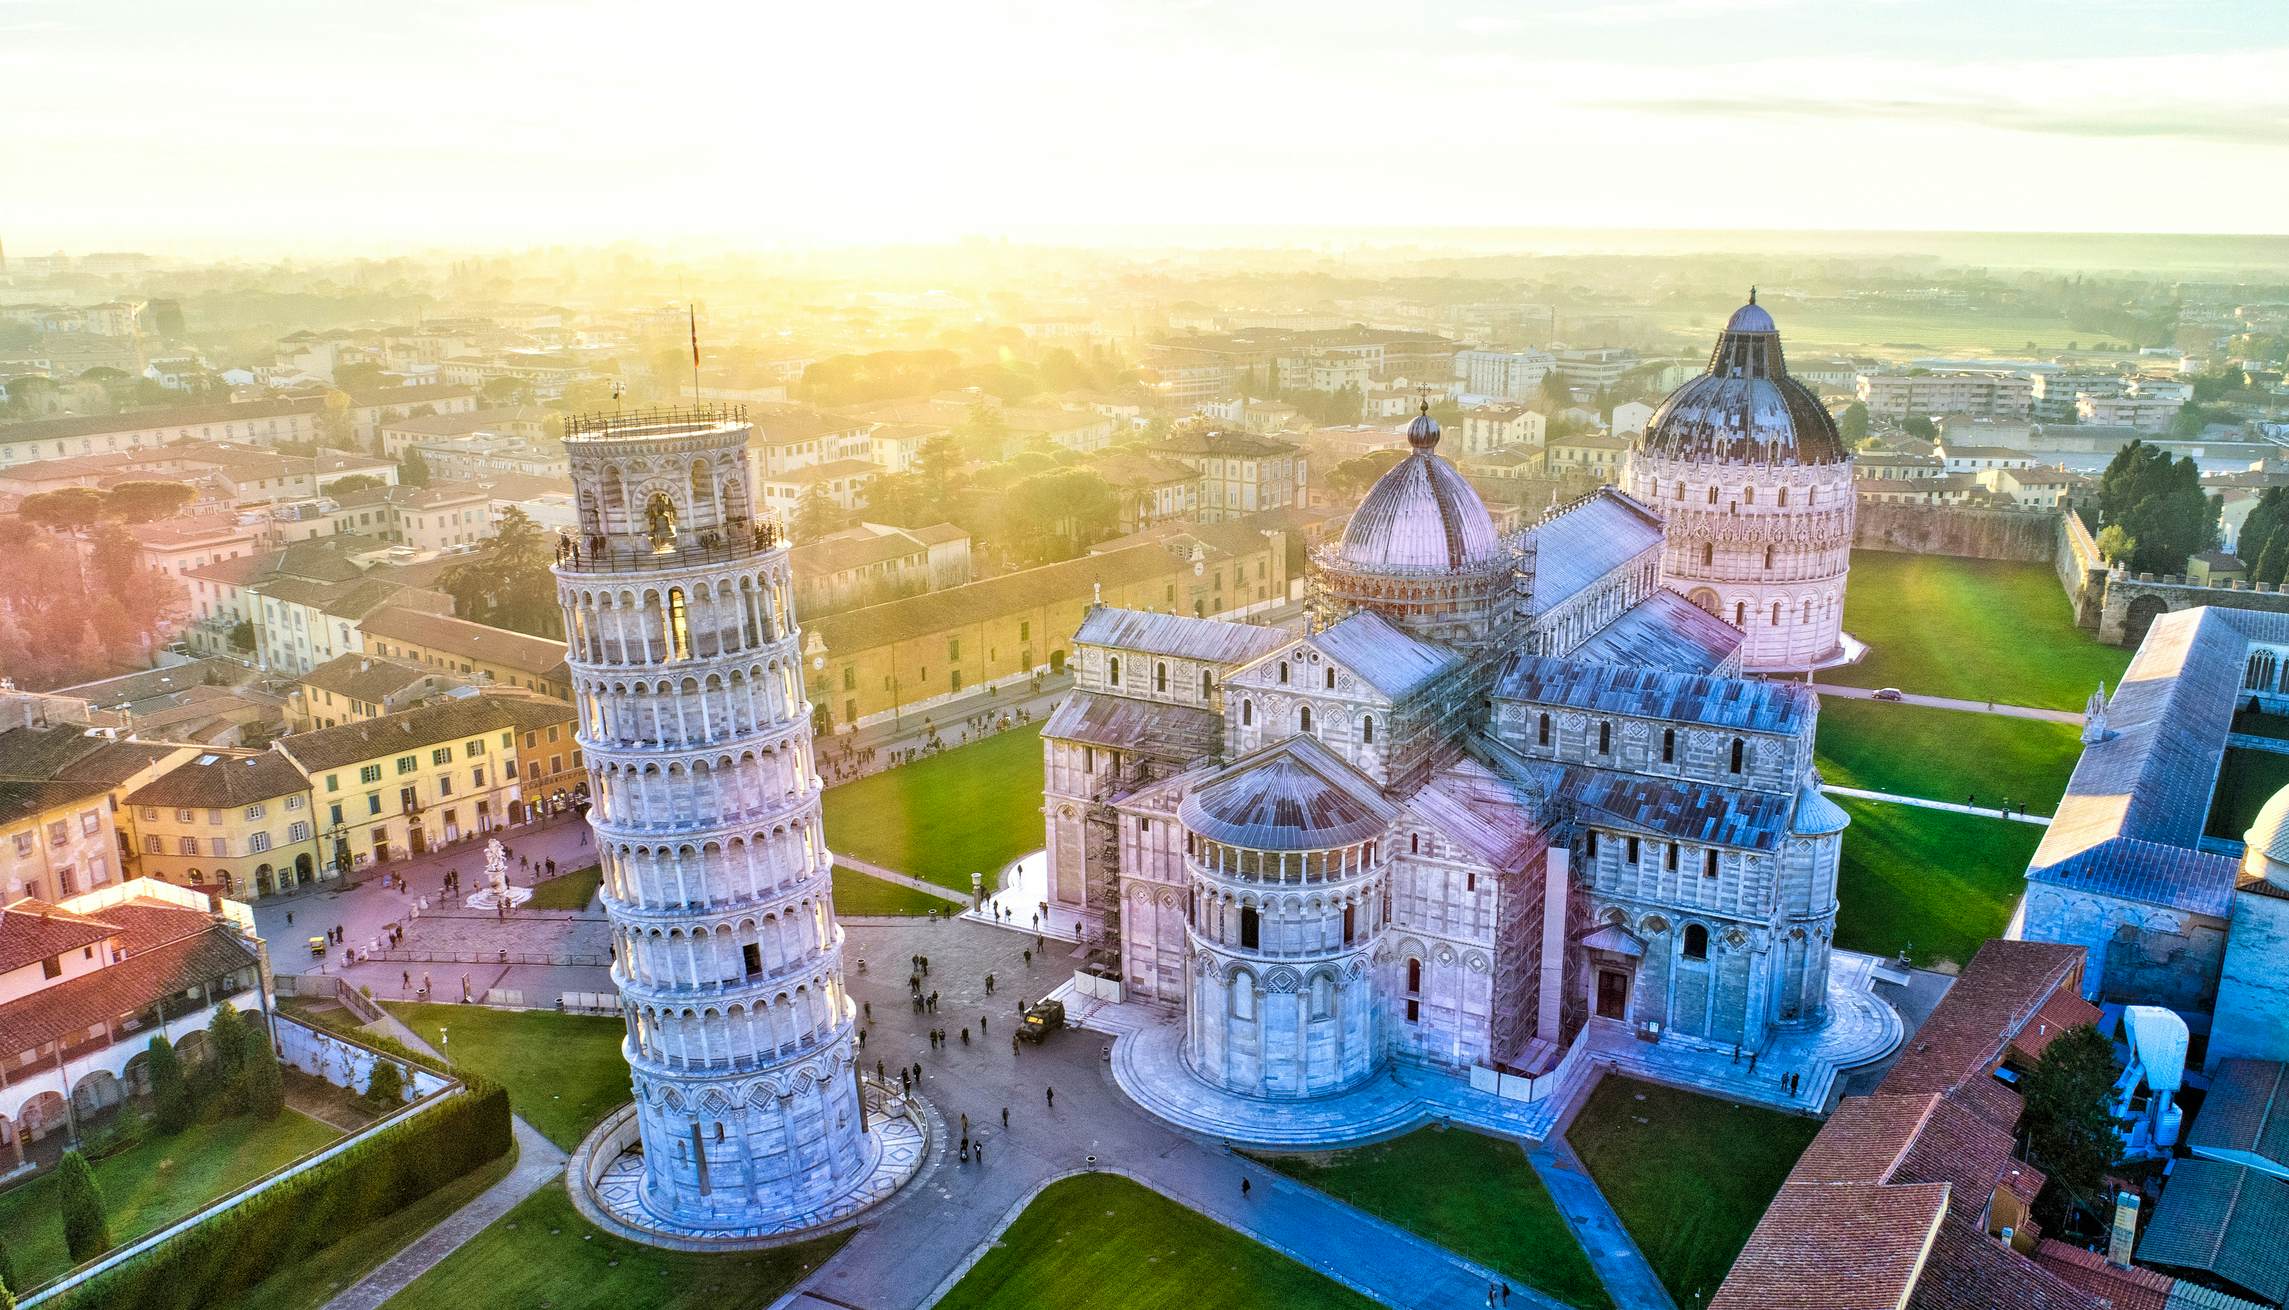 Pisa image